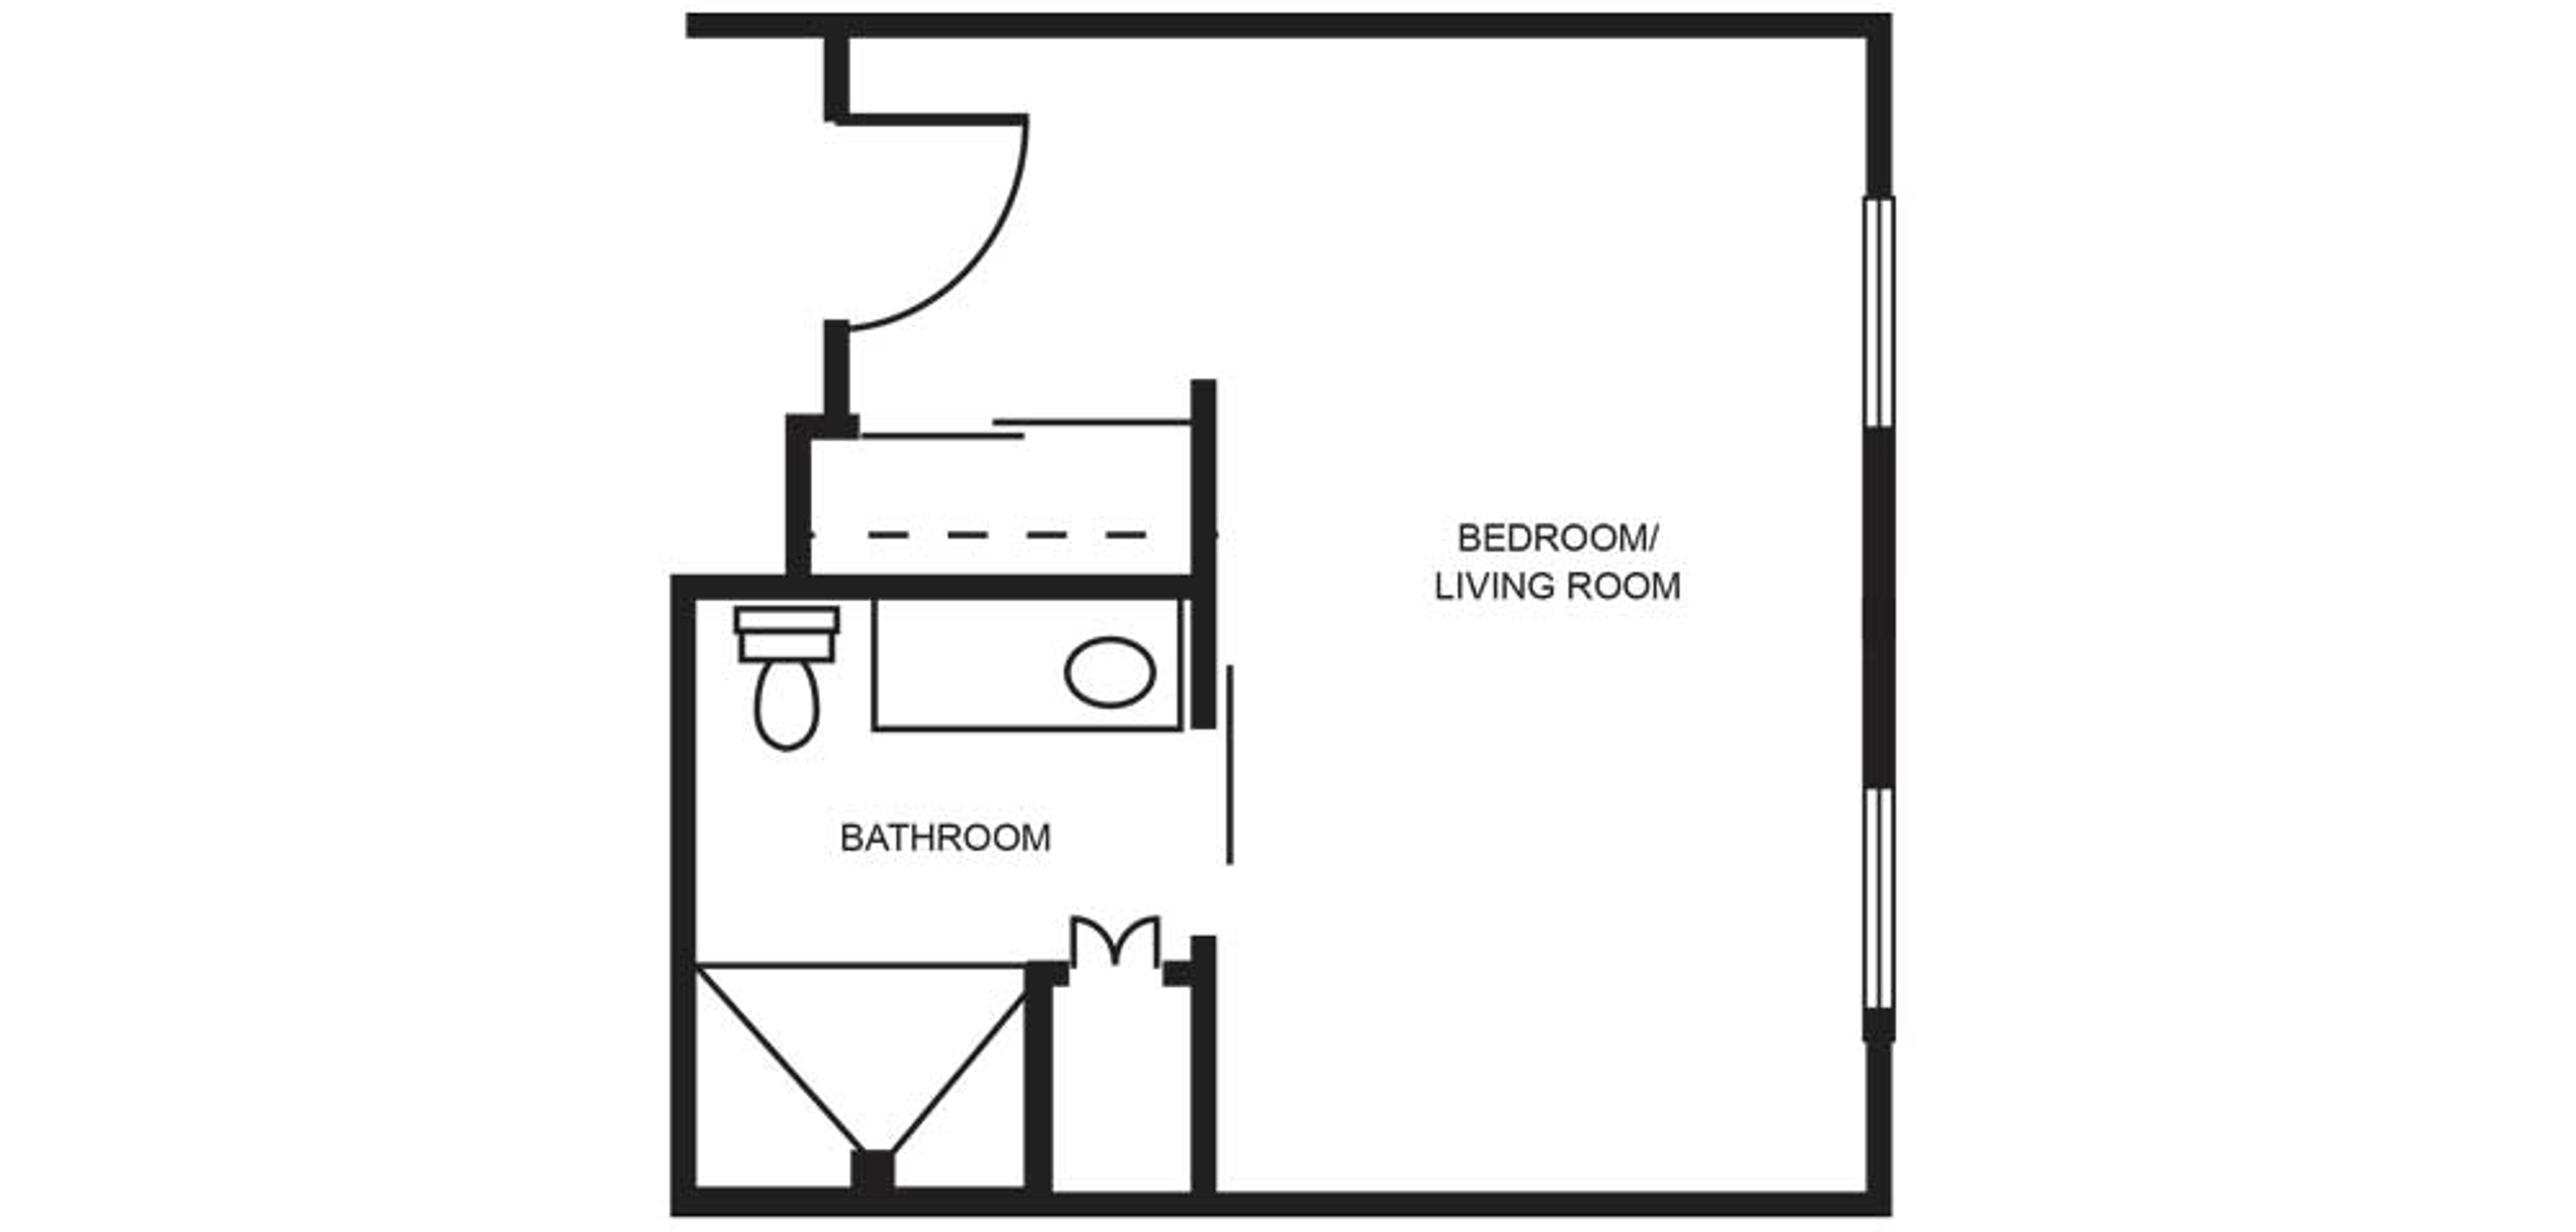 Floorplan - Dogwood Trails - Private suite Memory Care